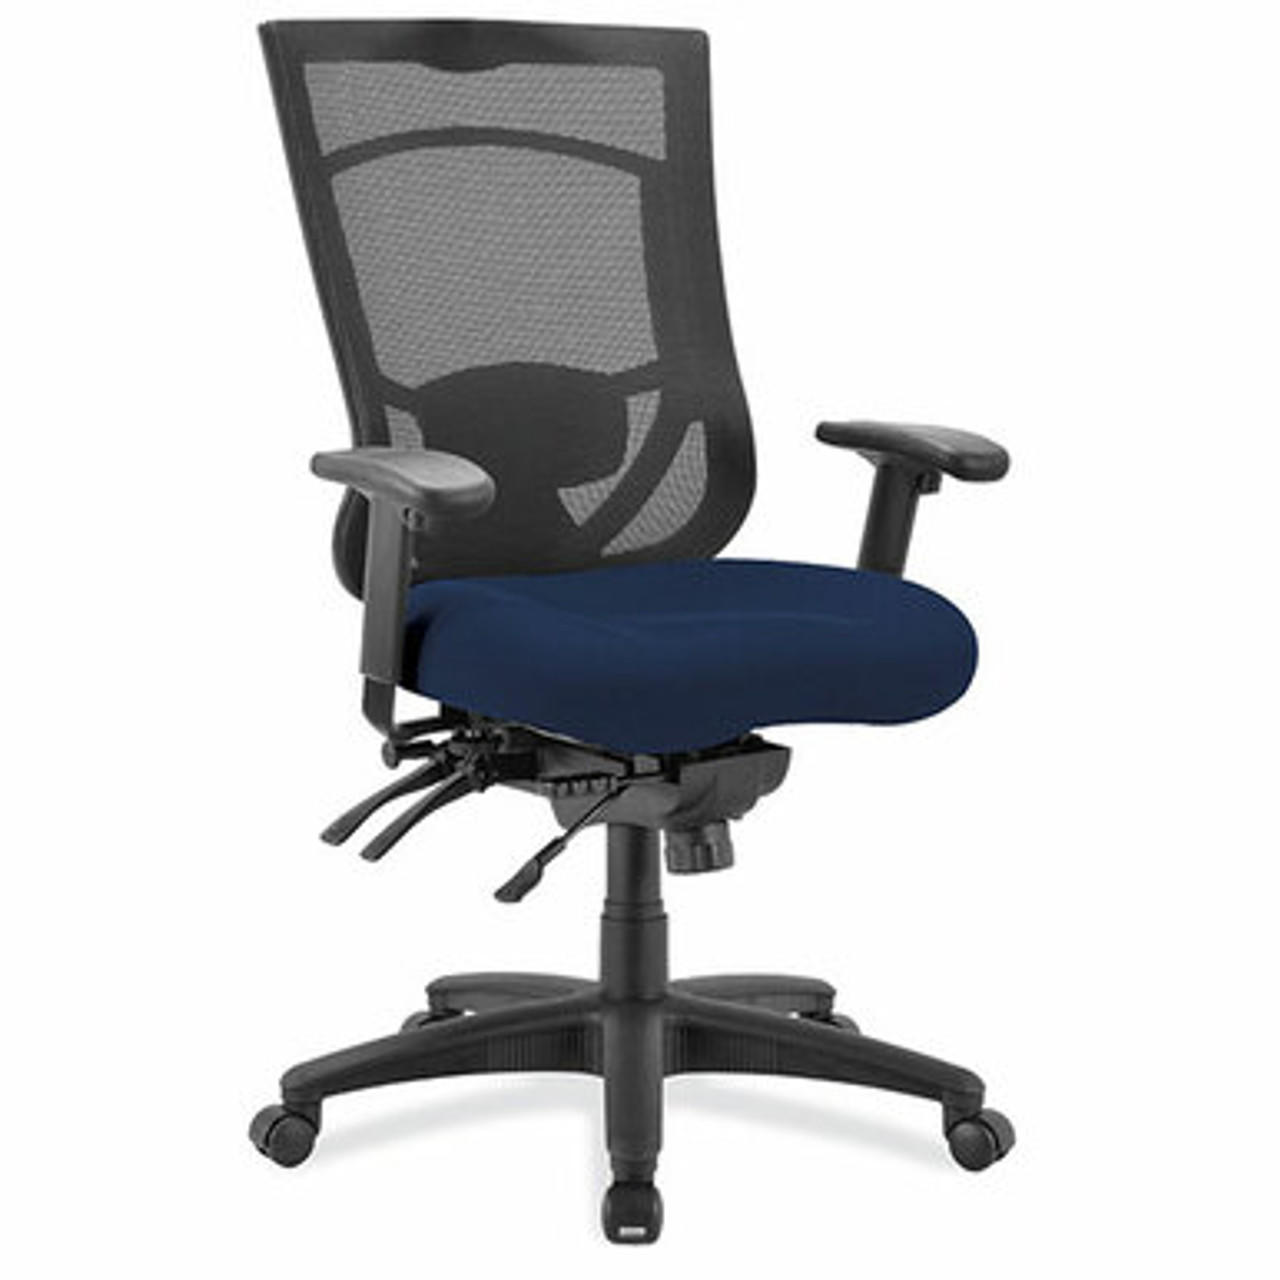  Office Source CoolMesh Pro Multi Function High Back Ergonomic Swivel Chair 8014ASNSF 